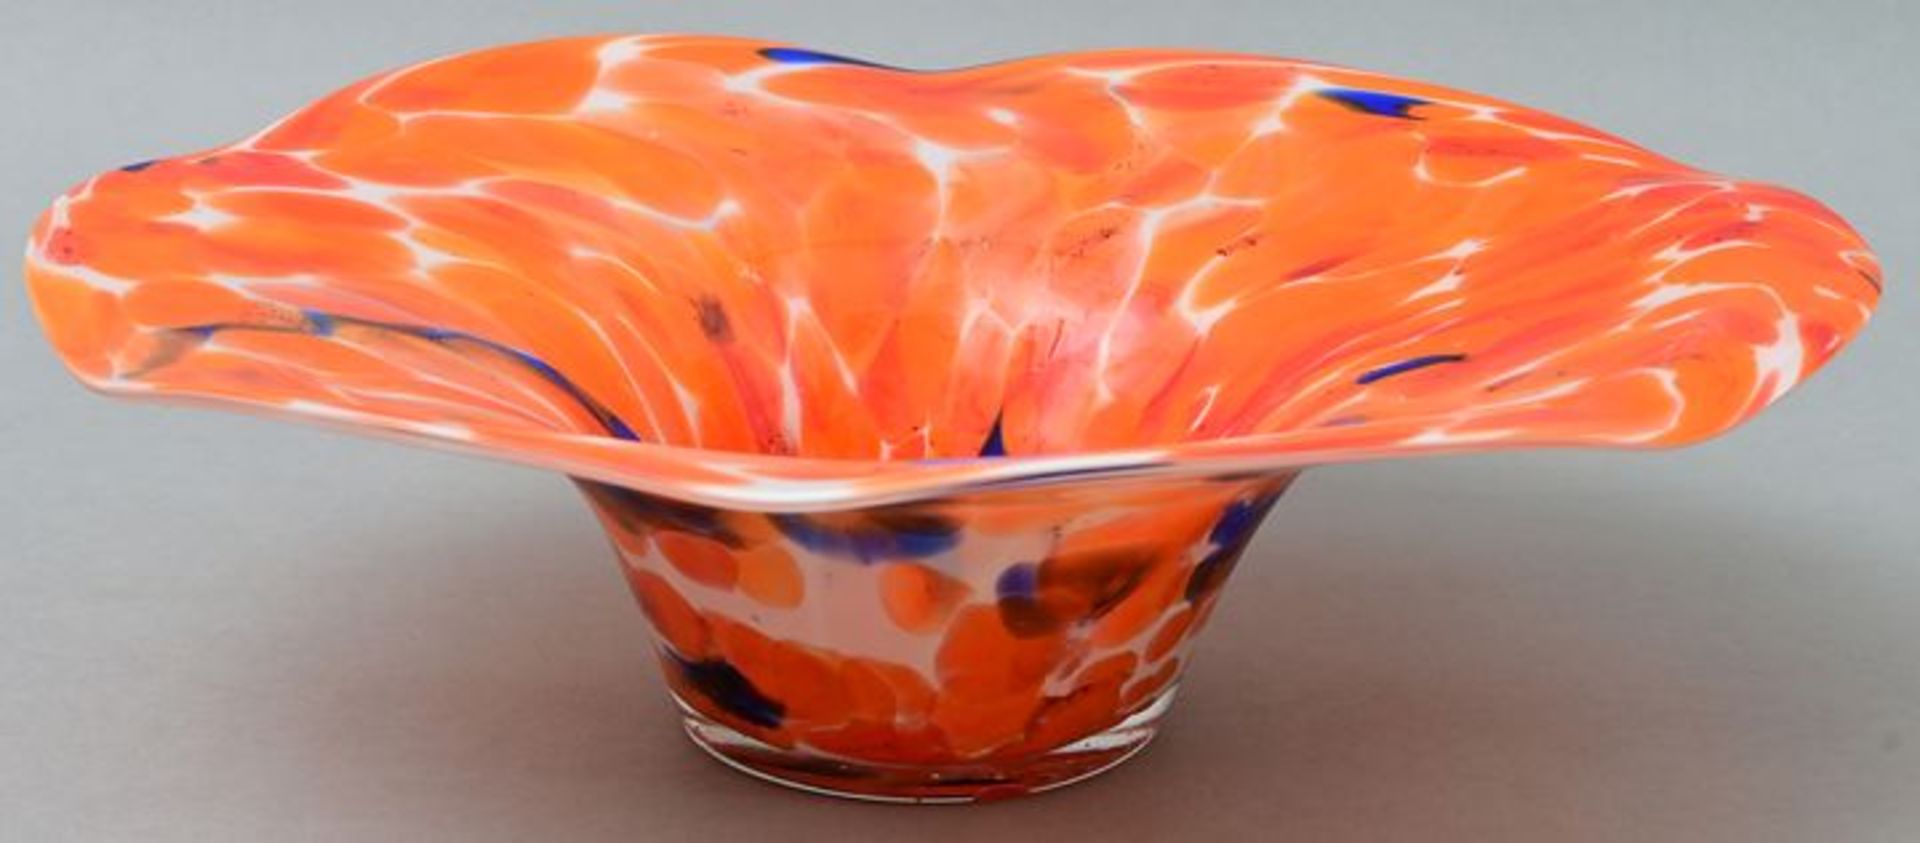 Glasschale / glass bowl